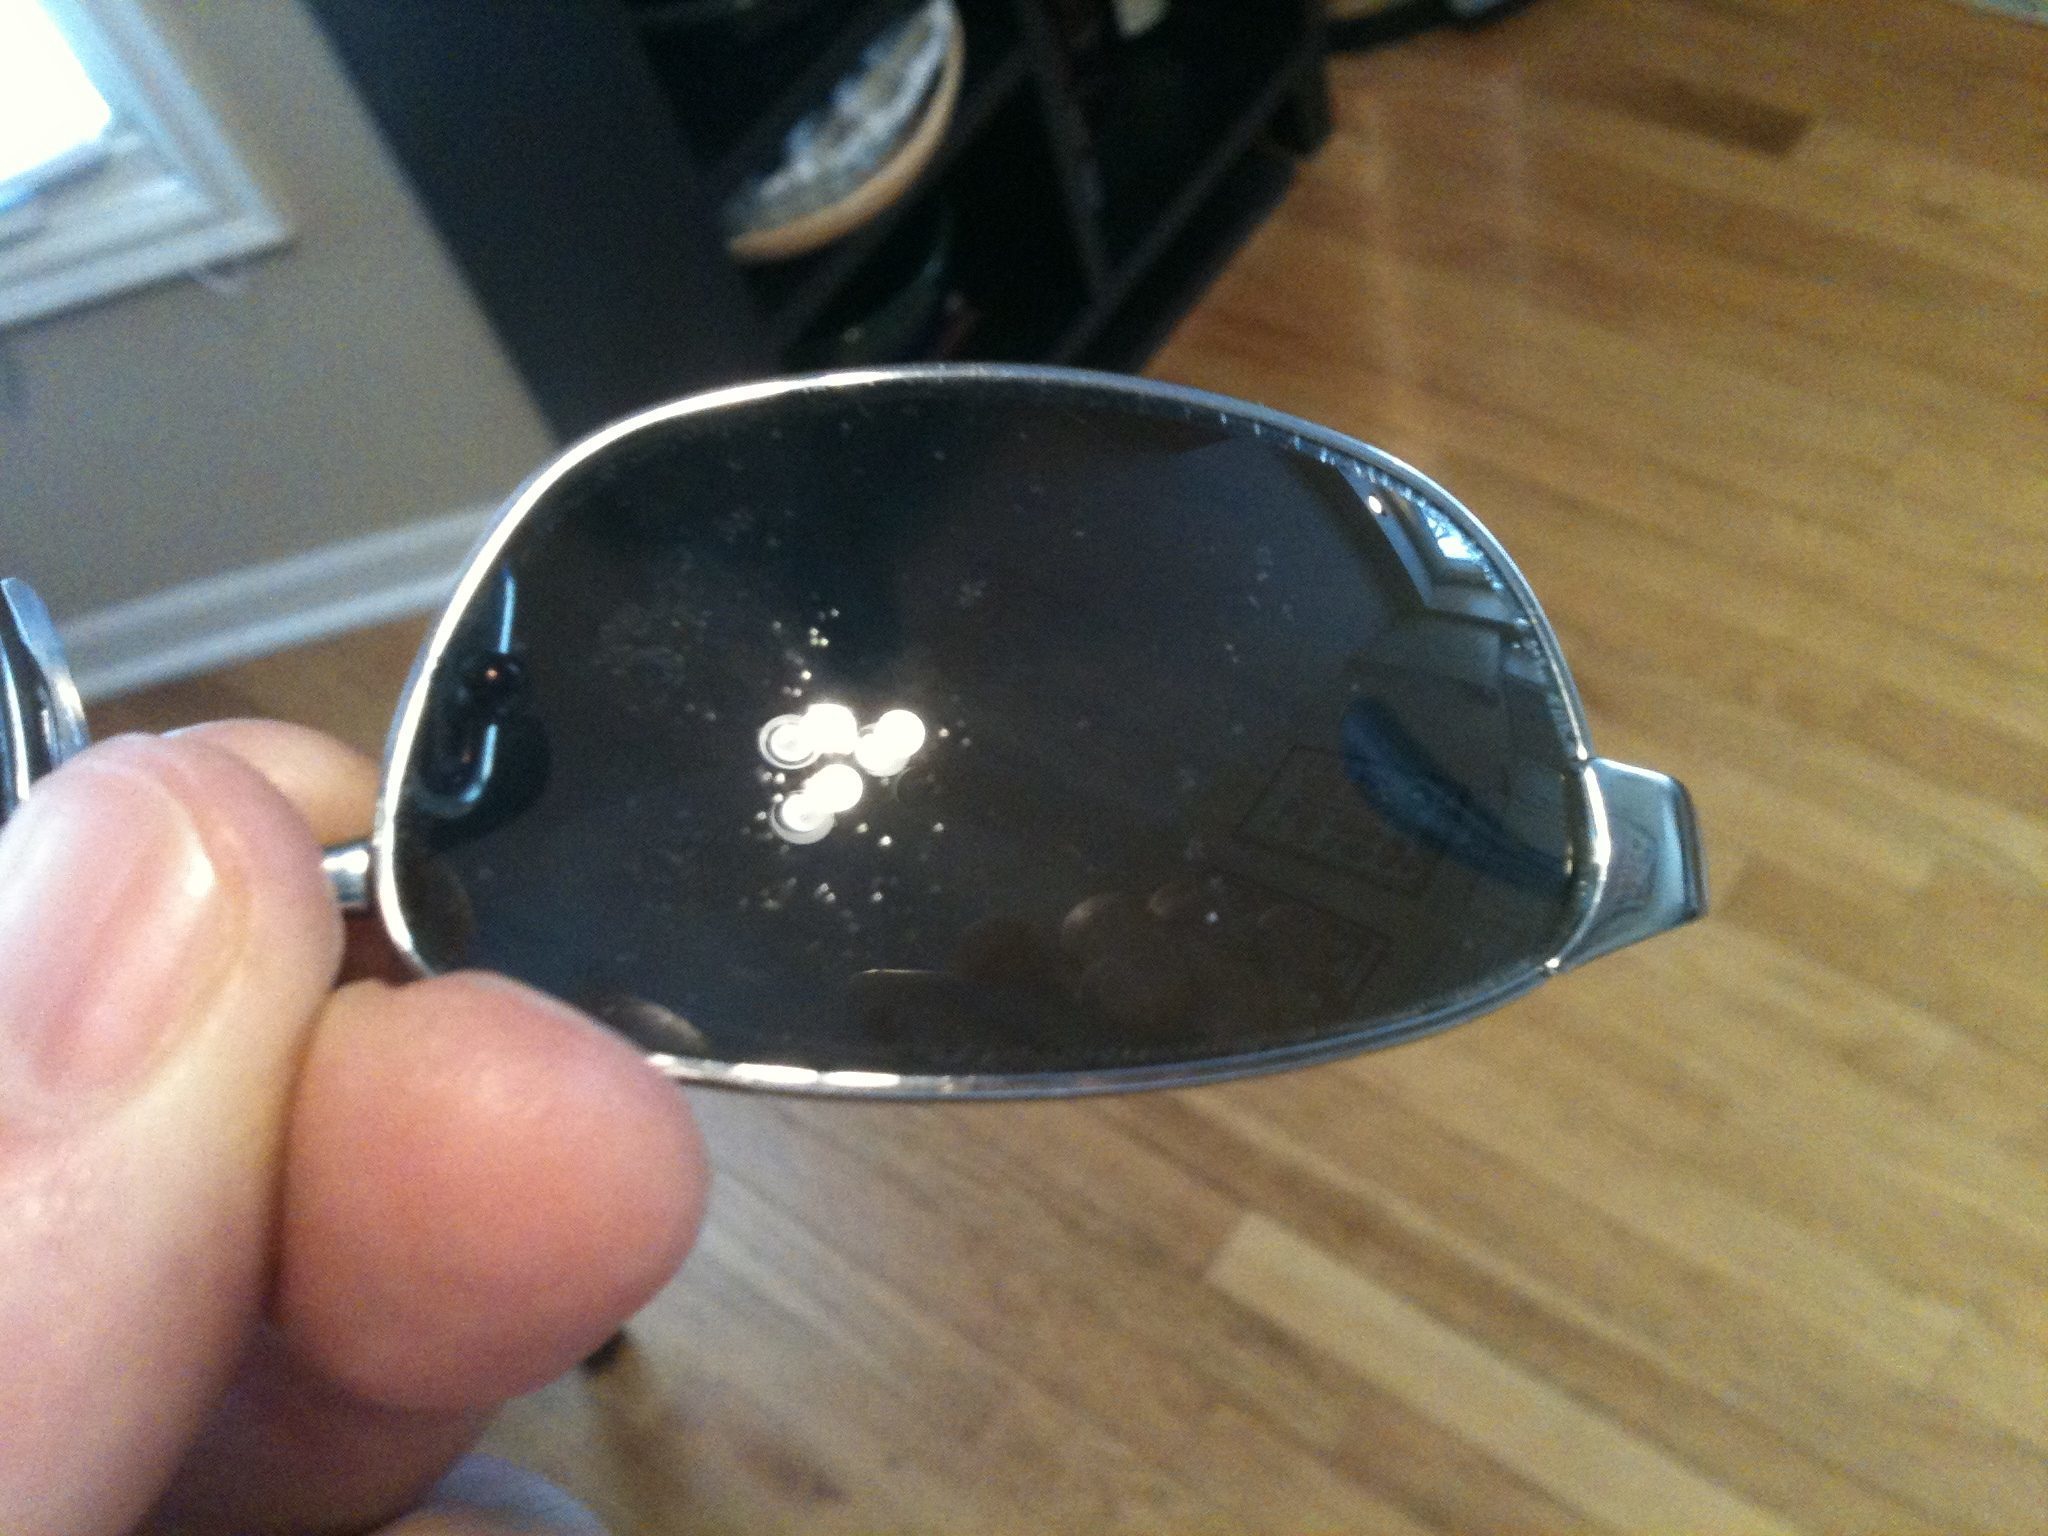 ray ban lenses peeling